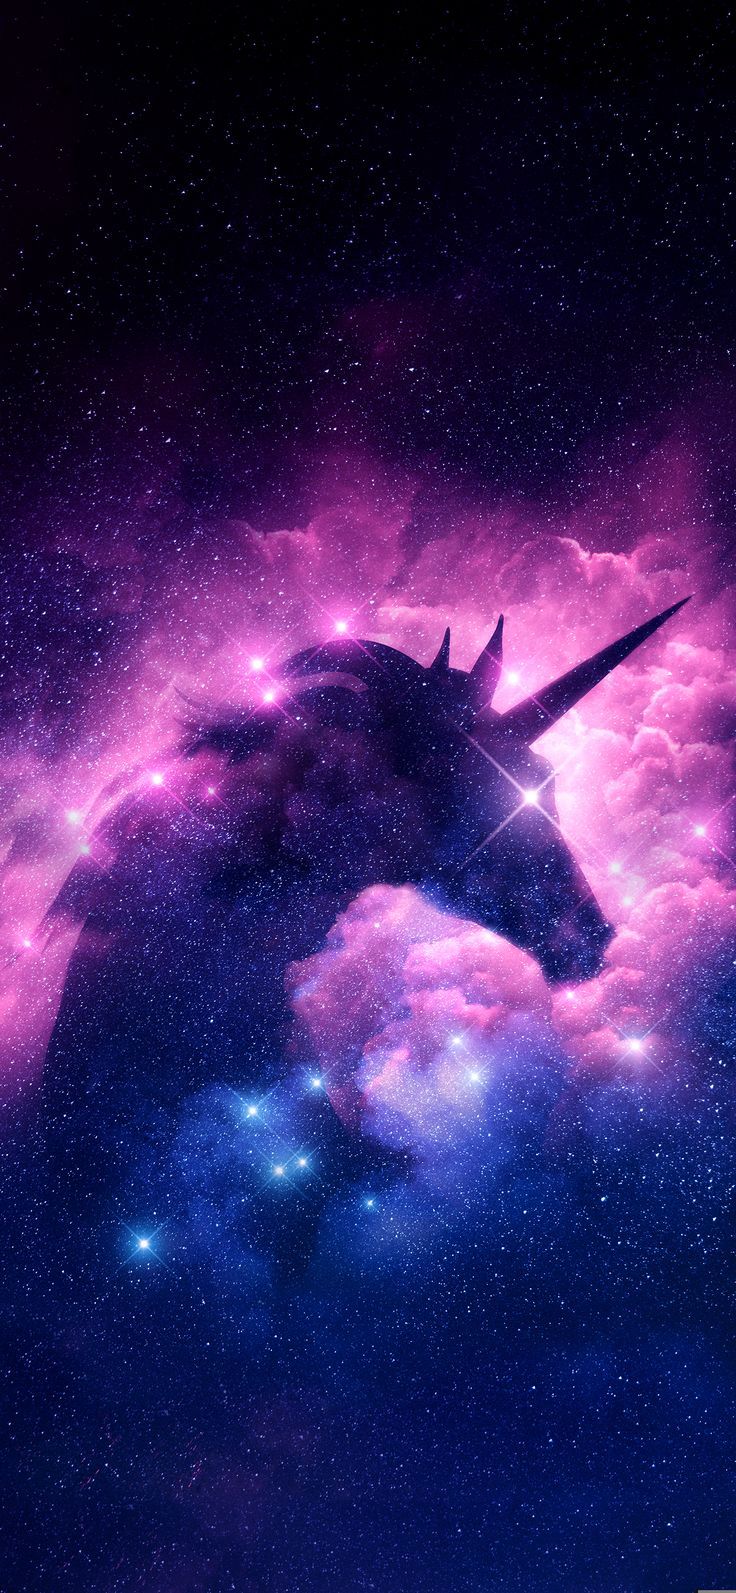 Unicorn Galaxy iPhone Wallpaper #galaxy #iphone #unicorn #wallpaper. iPhone wallpaper unicorn, Galaxy wallpaper iphone, Unicorn wallpaper cute